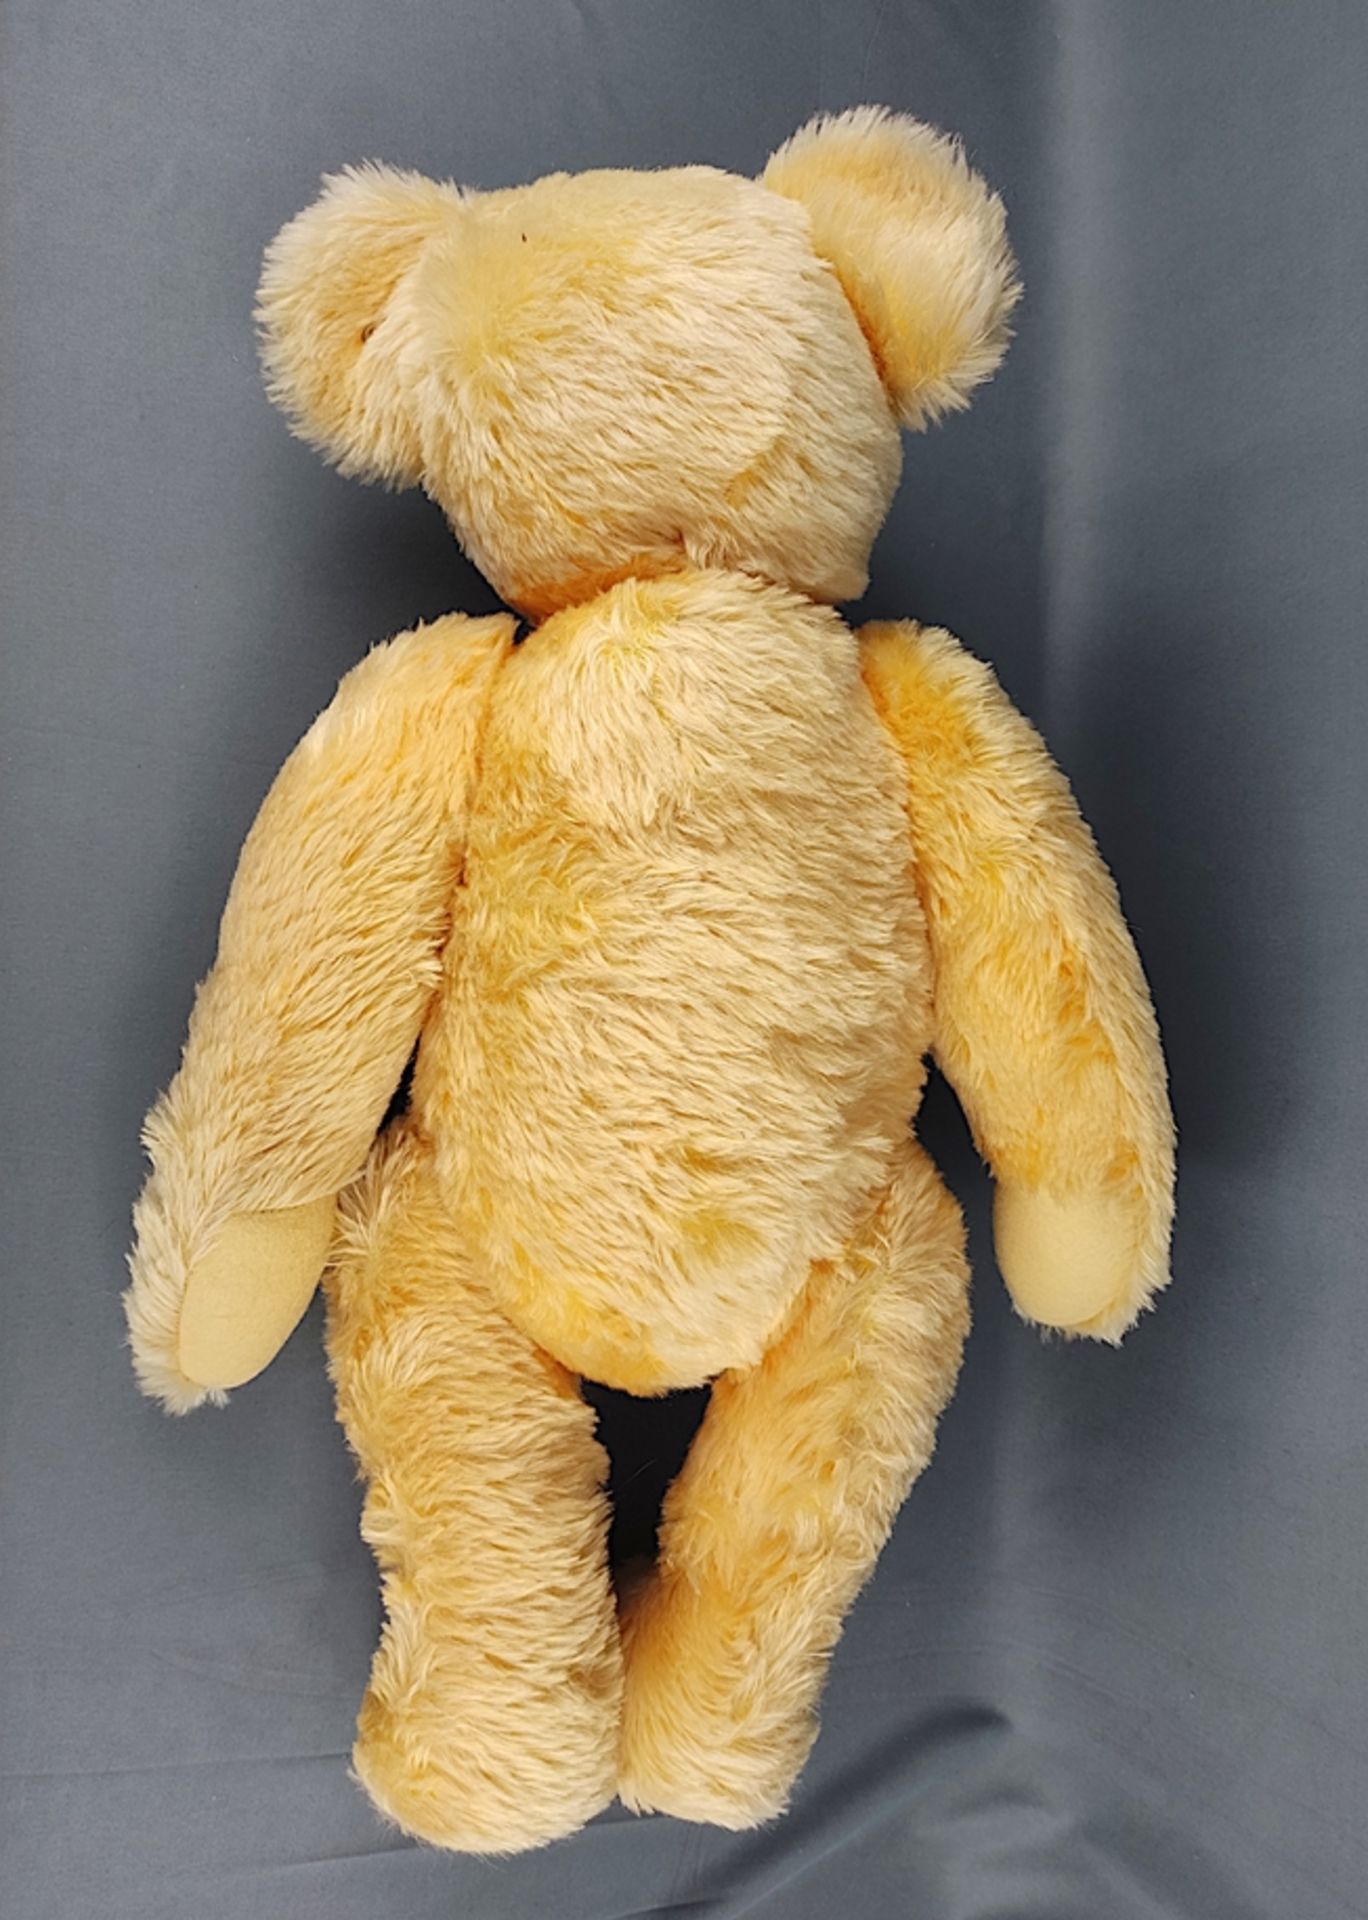 Steiff replica teddy bear "1909", blond 65, limited edition 5000, in original box, flag missing - Image 2 of 4